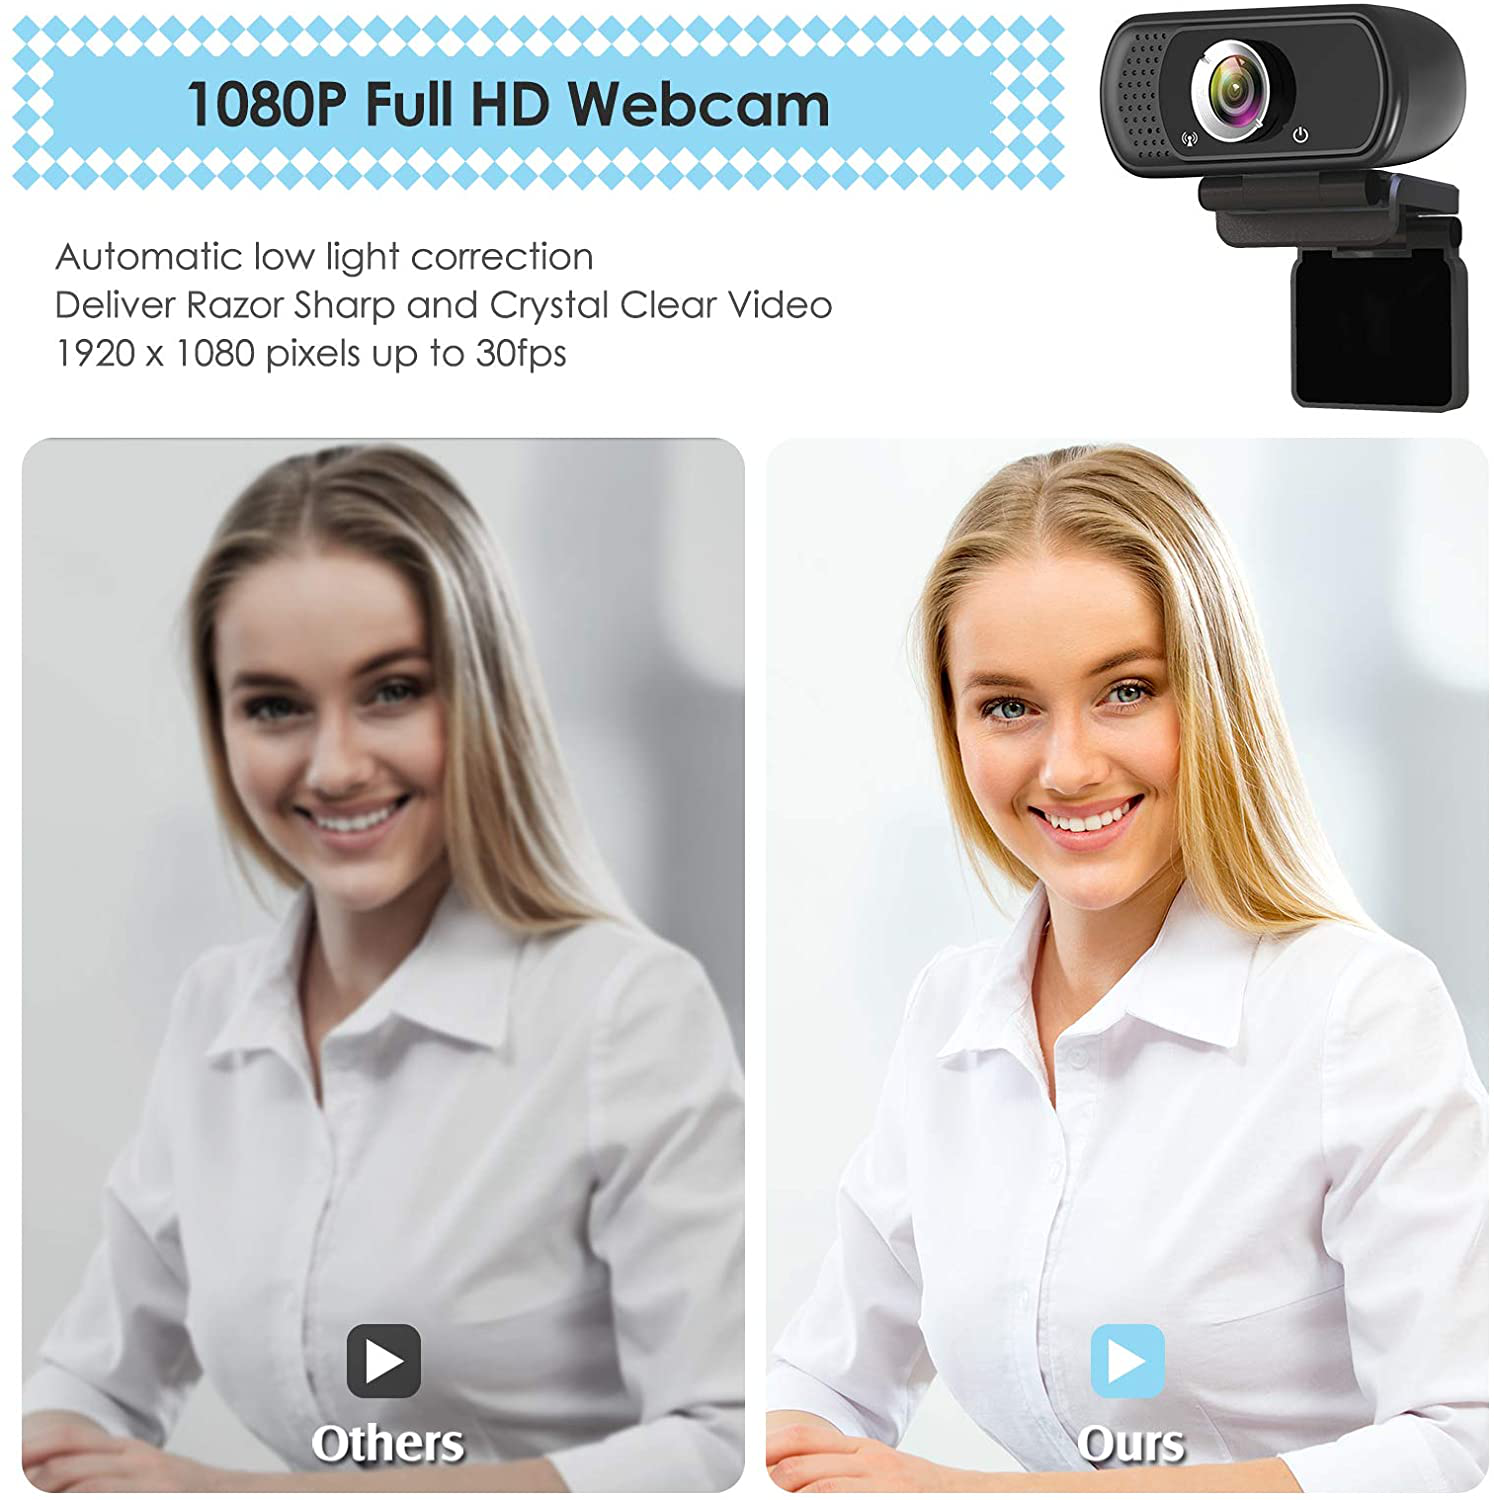 Webcam HD 1080p Web Camera, USB PC Computer Webcam with Microphone, Laptop Desktop Full HD Camera Video Webcam 110 Degree Widescreen